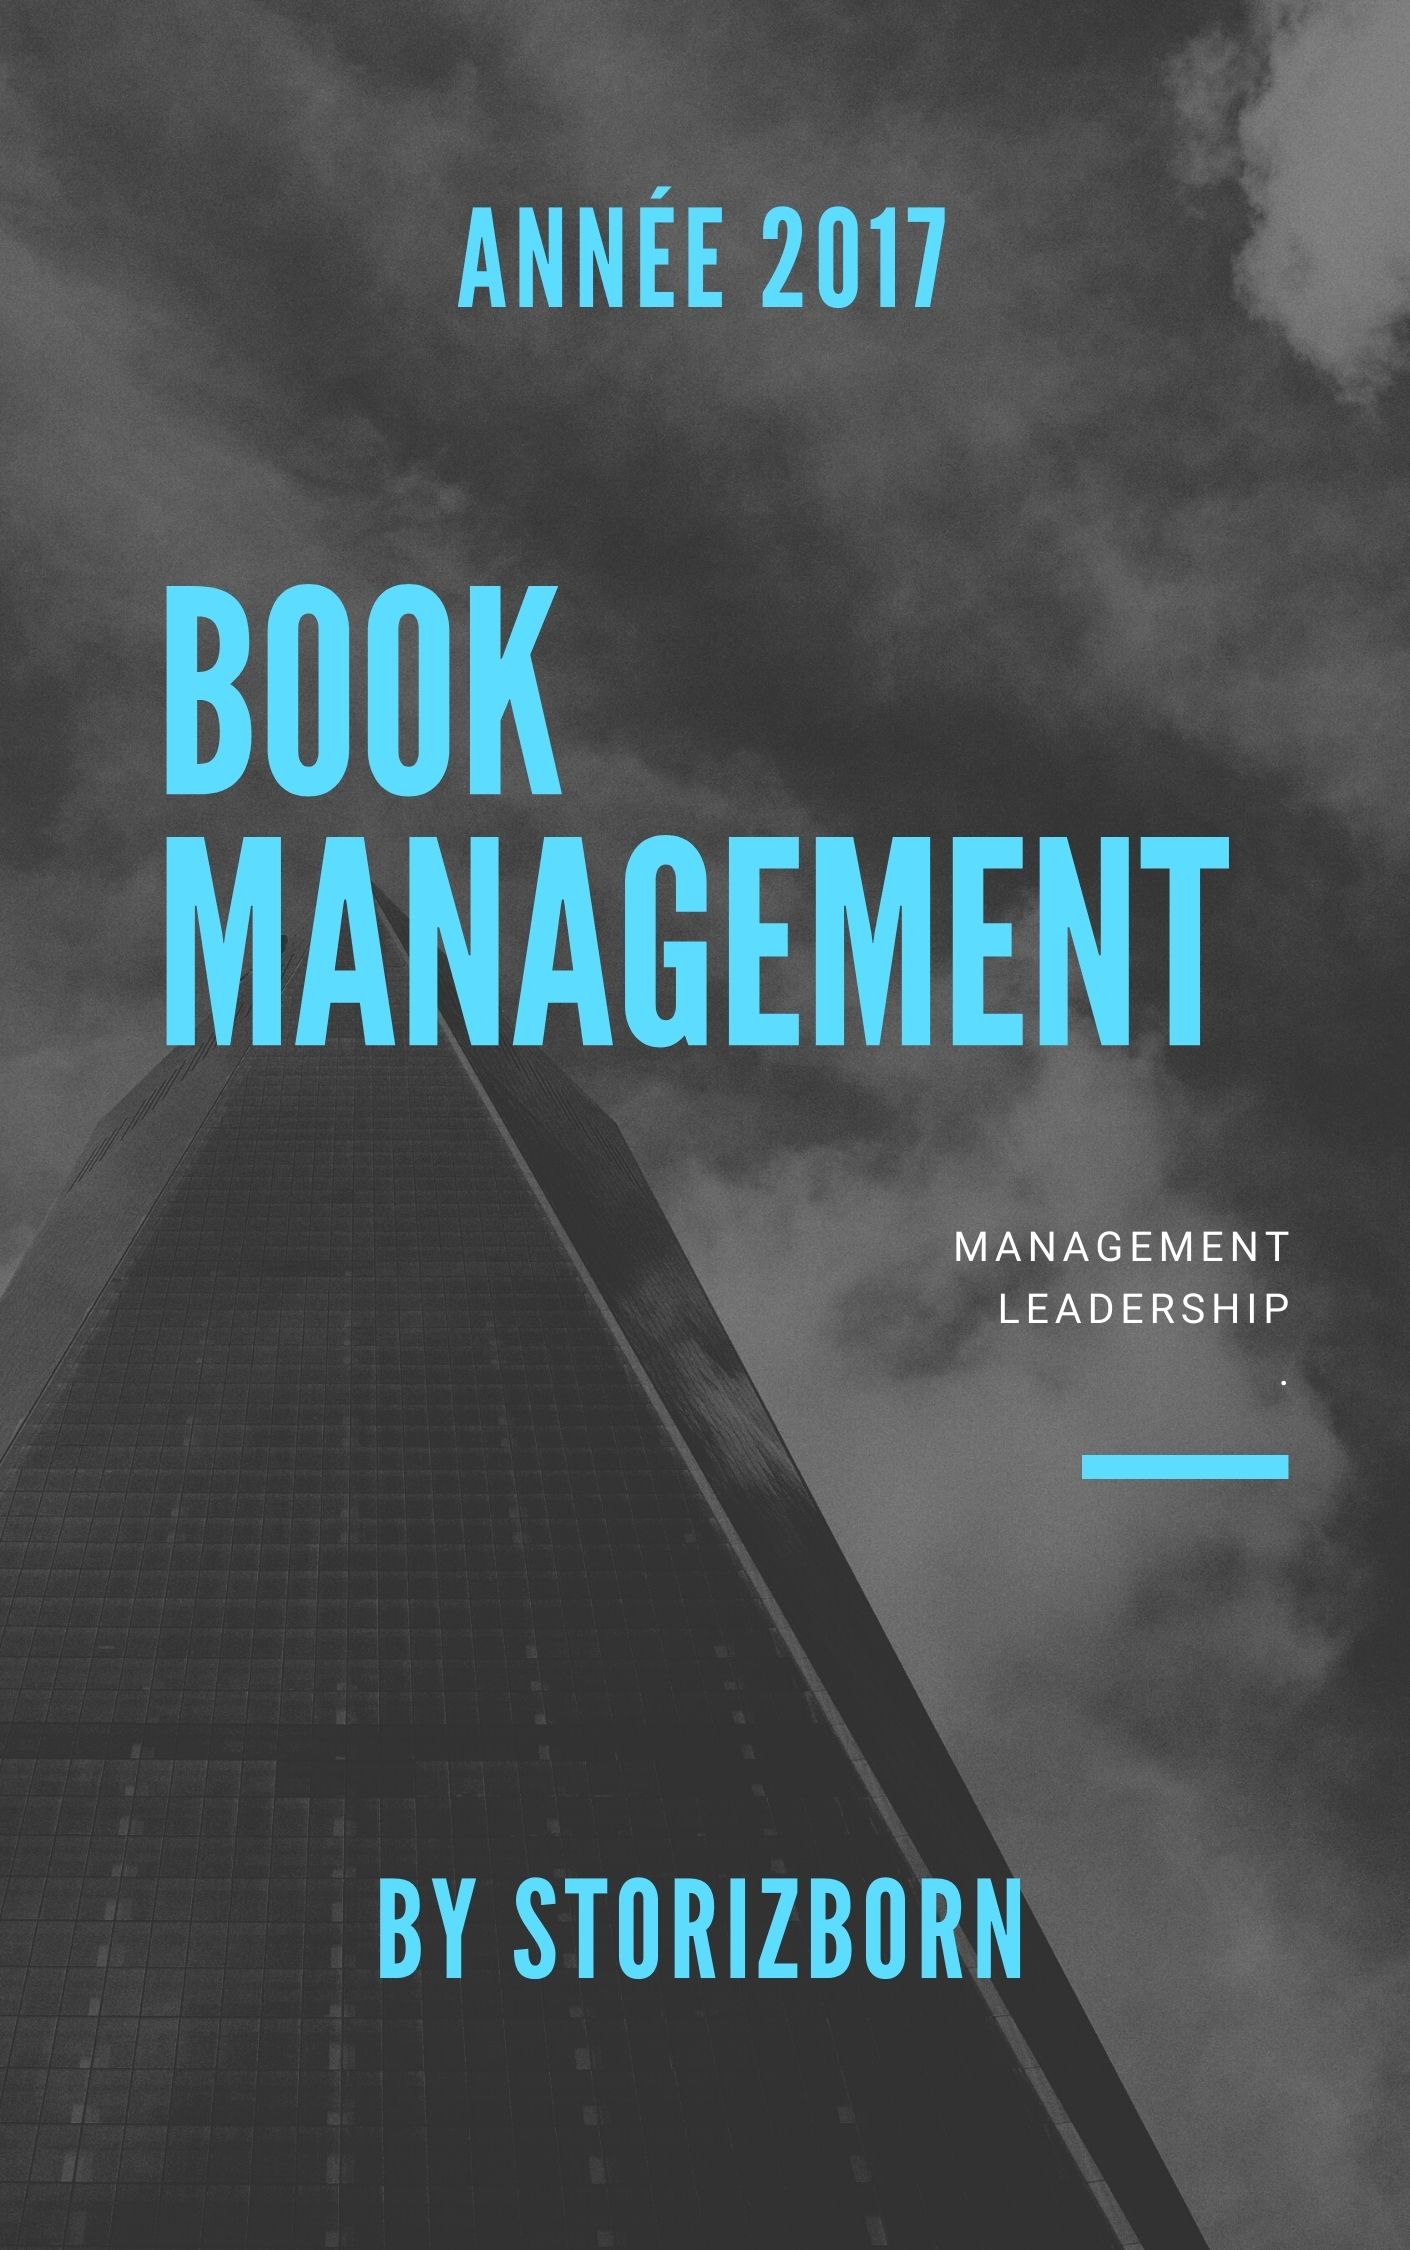  Book management 2017